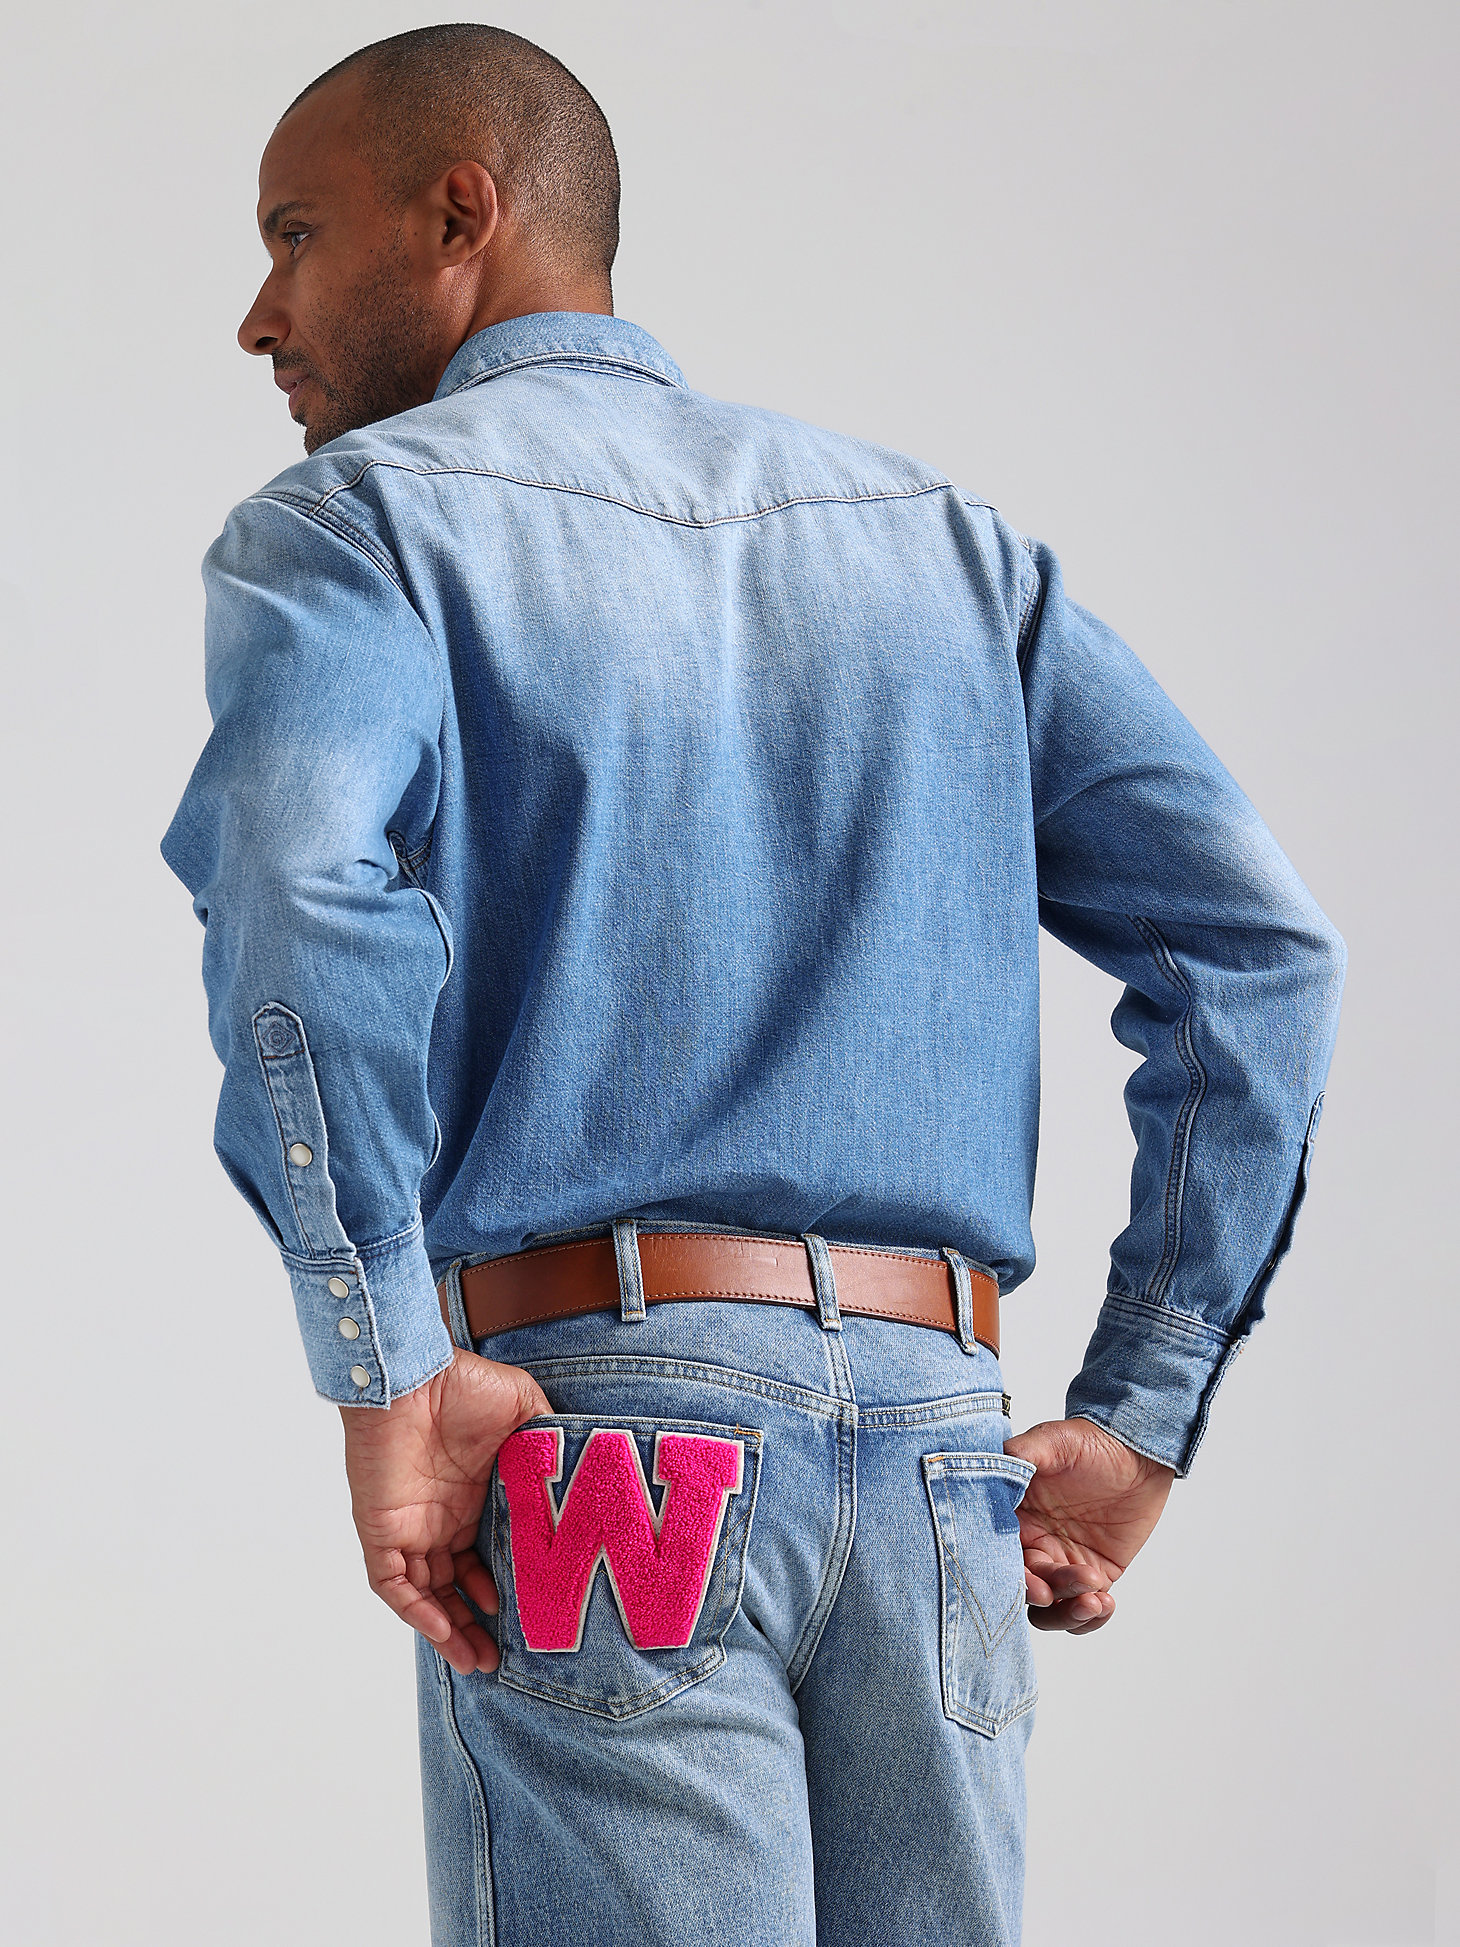 GANT x Wrangler Men's MWZ Jean in Light Blue alternative view 5